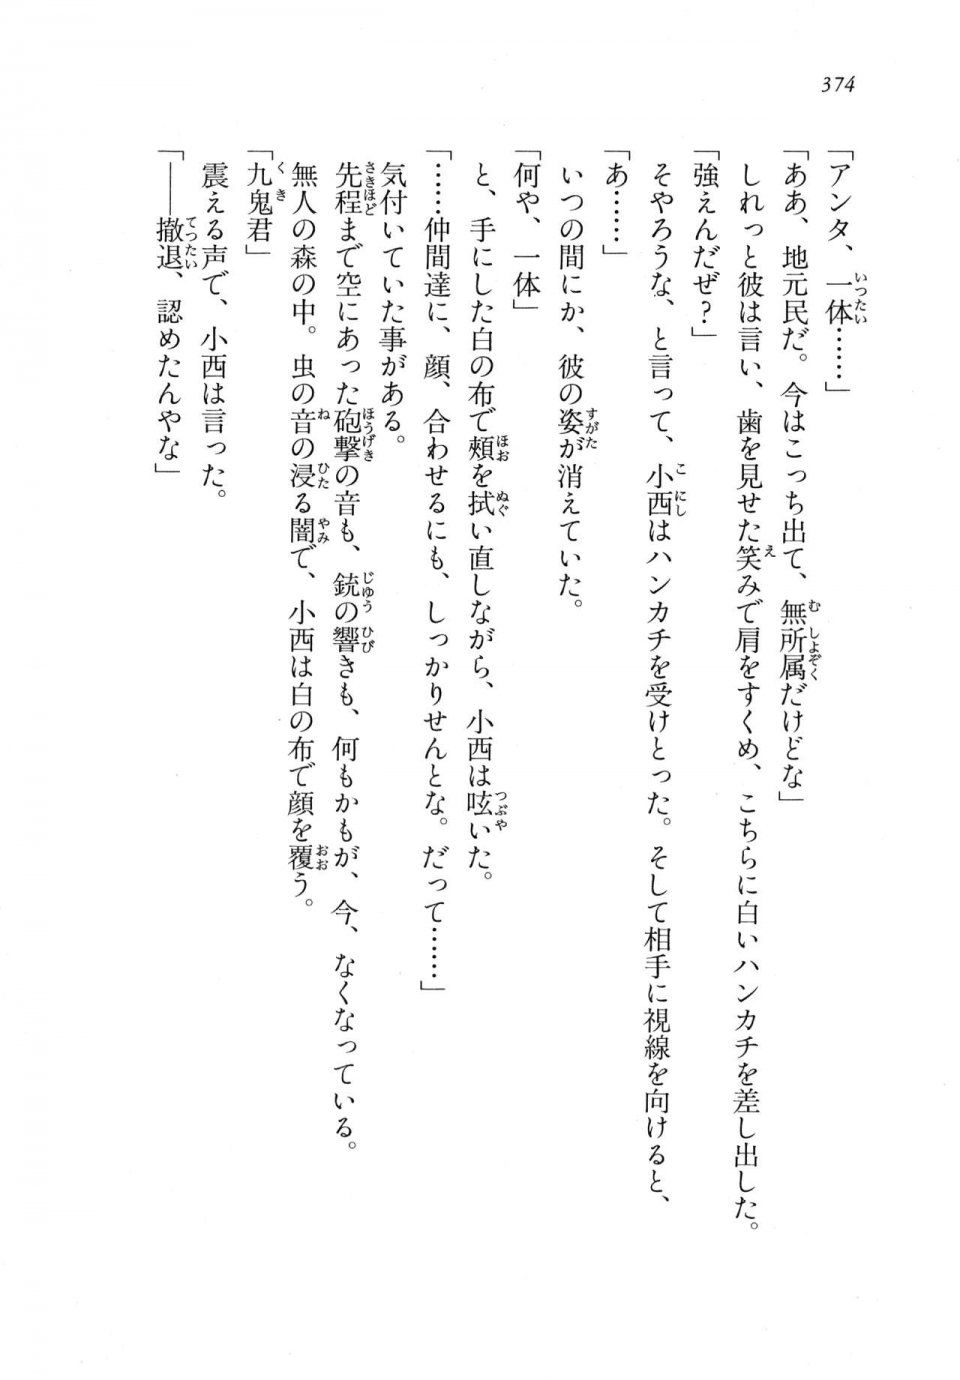 Kyoukai Senjou no Horizon LN Vol 18(7C) Part 1 - Photo #374